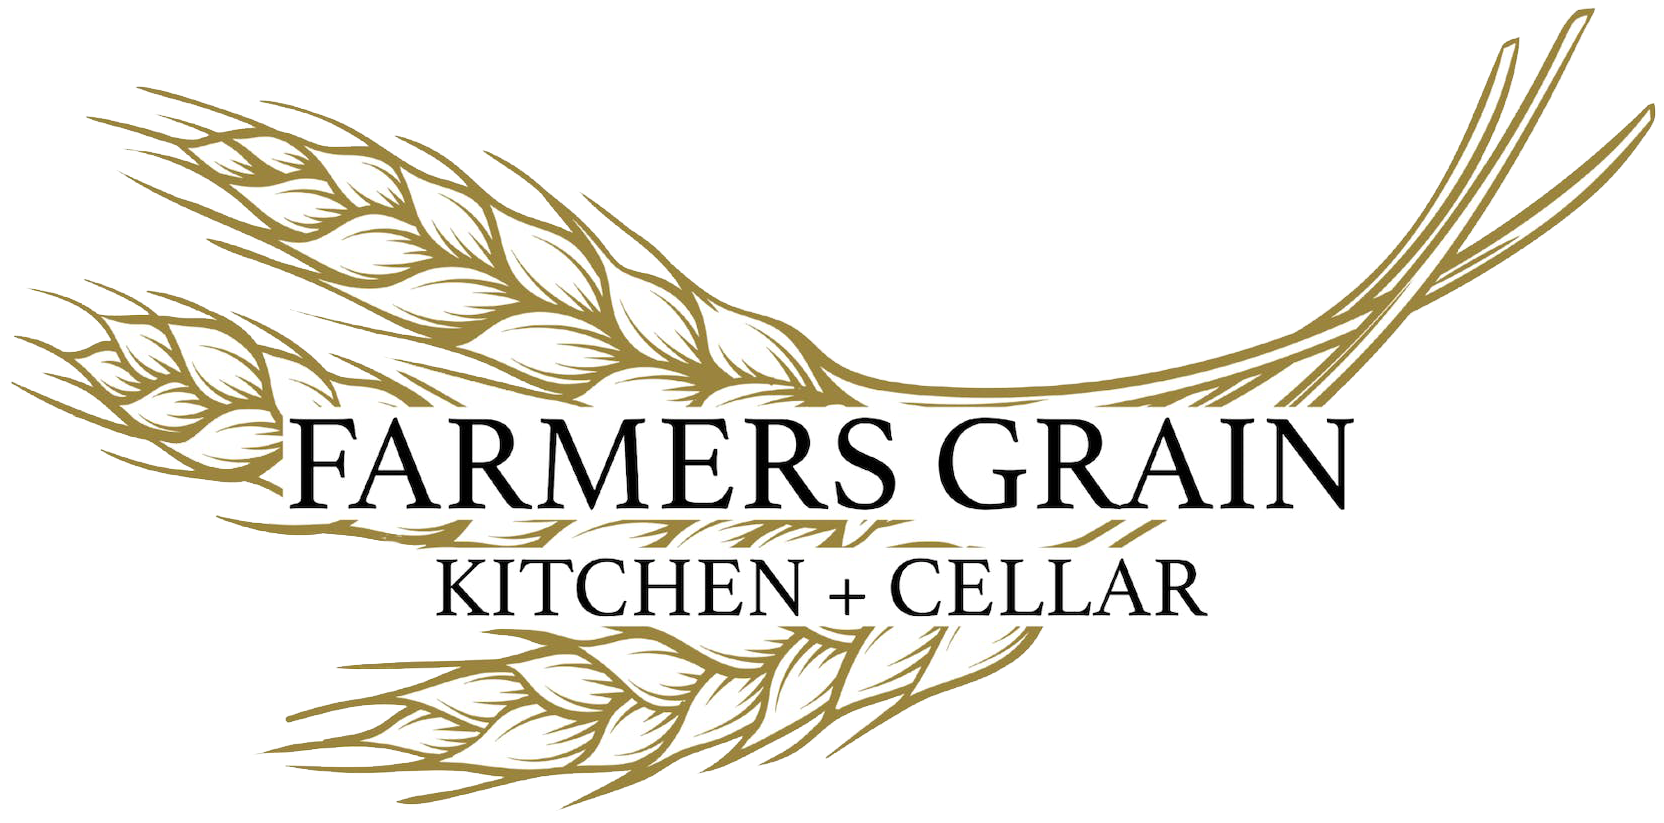 Farmers Grain Kitchen + Cellar Home